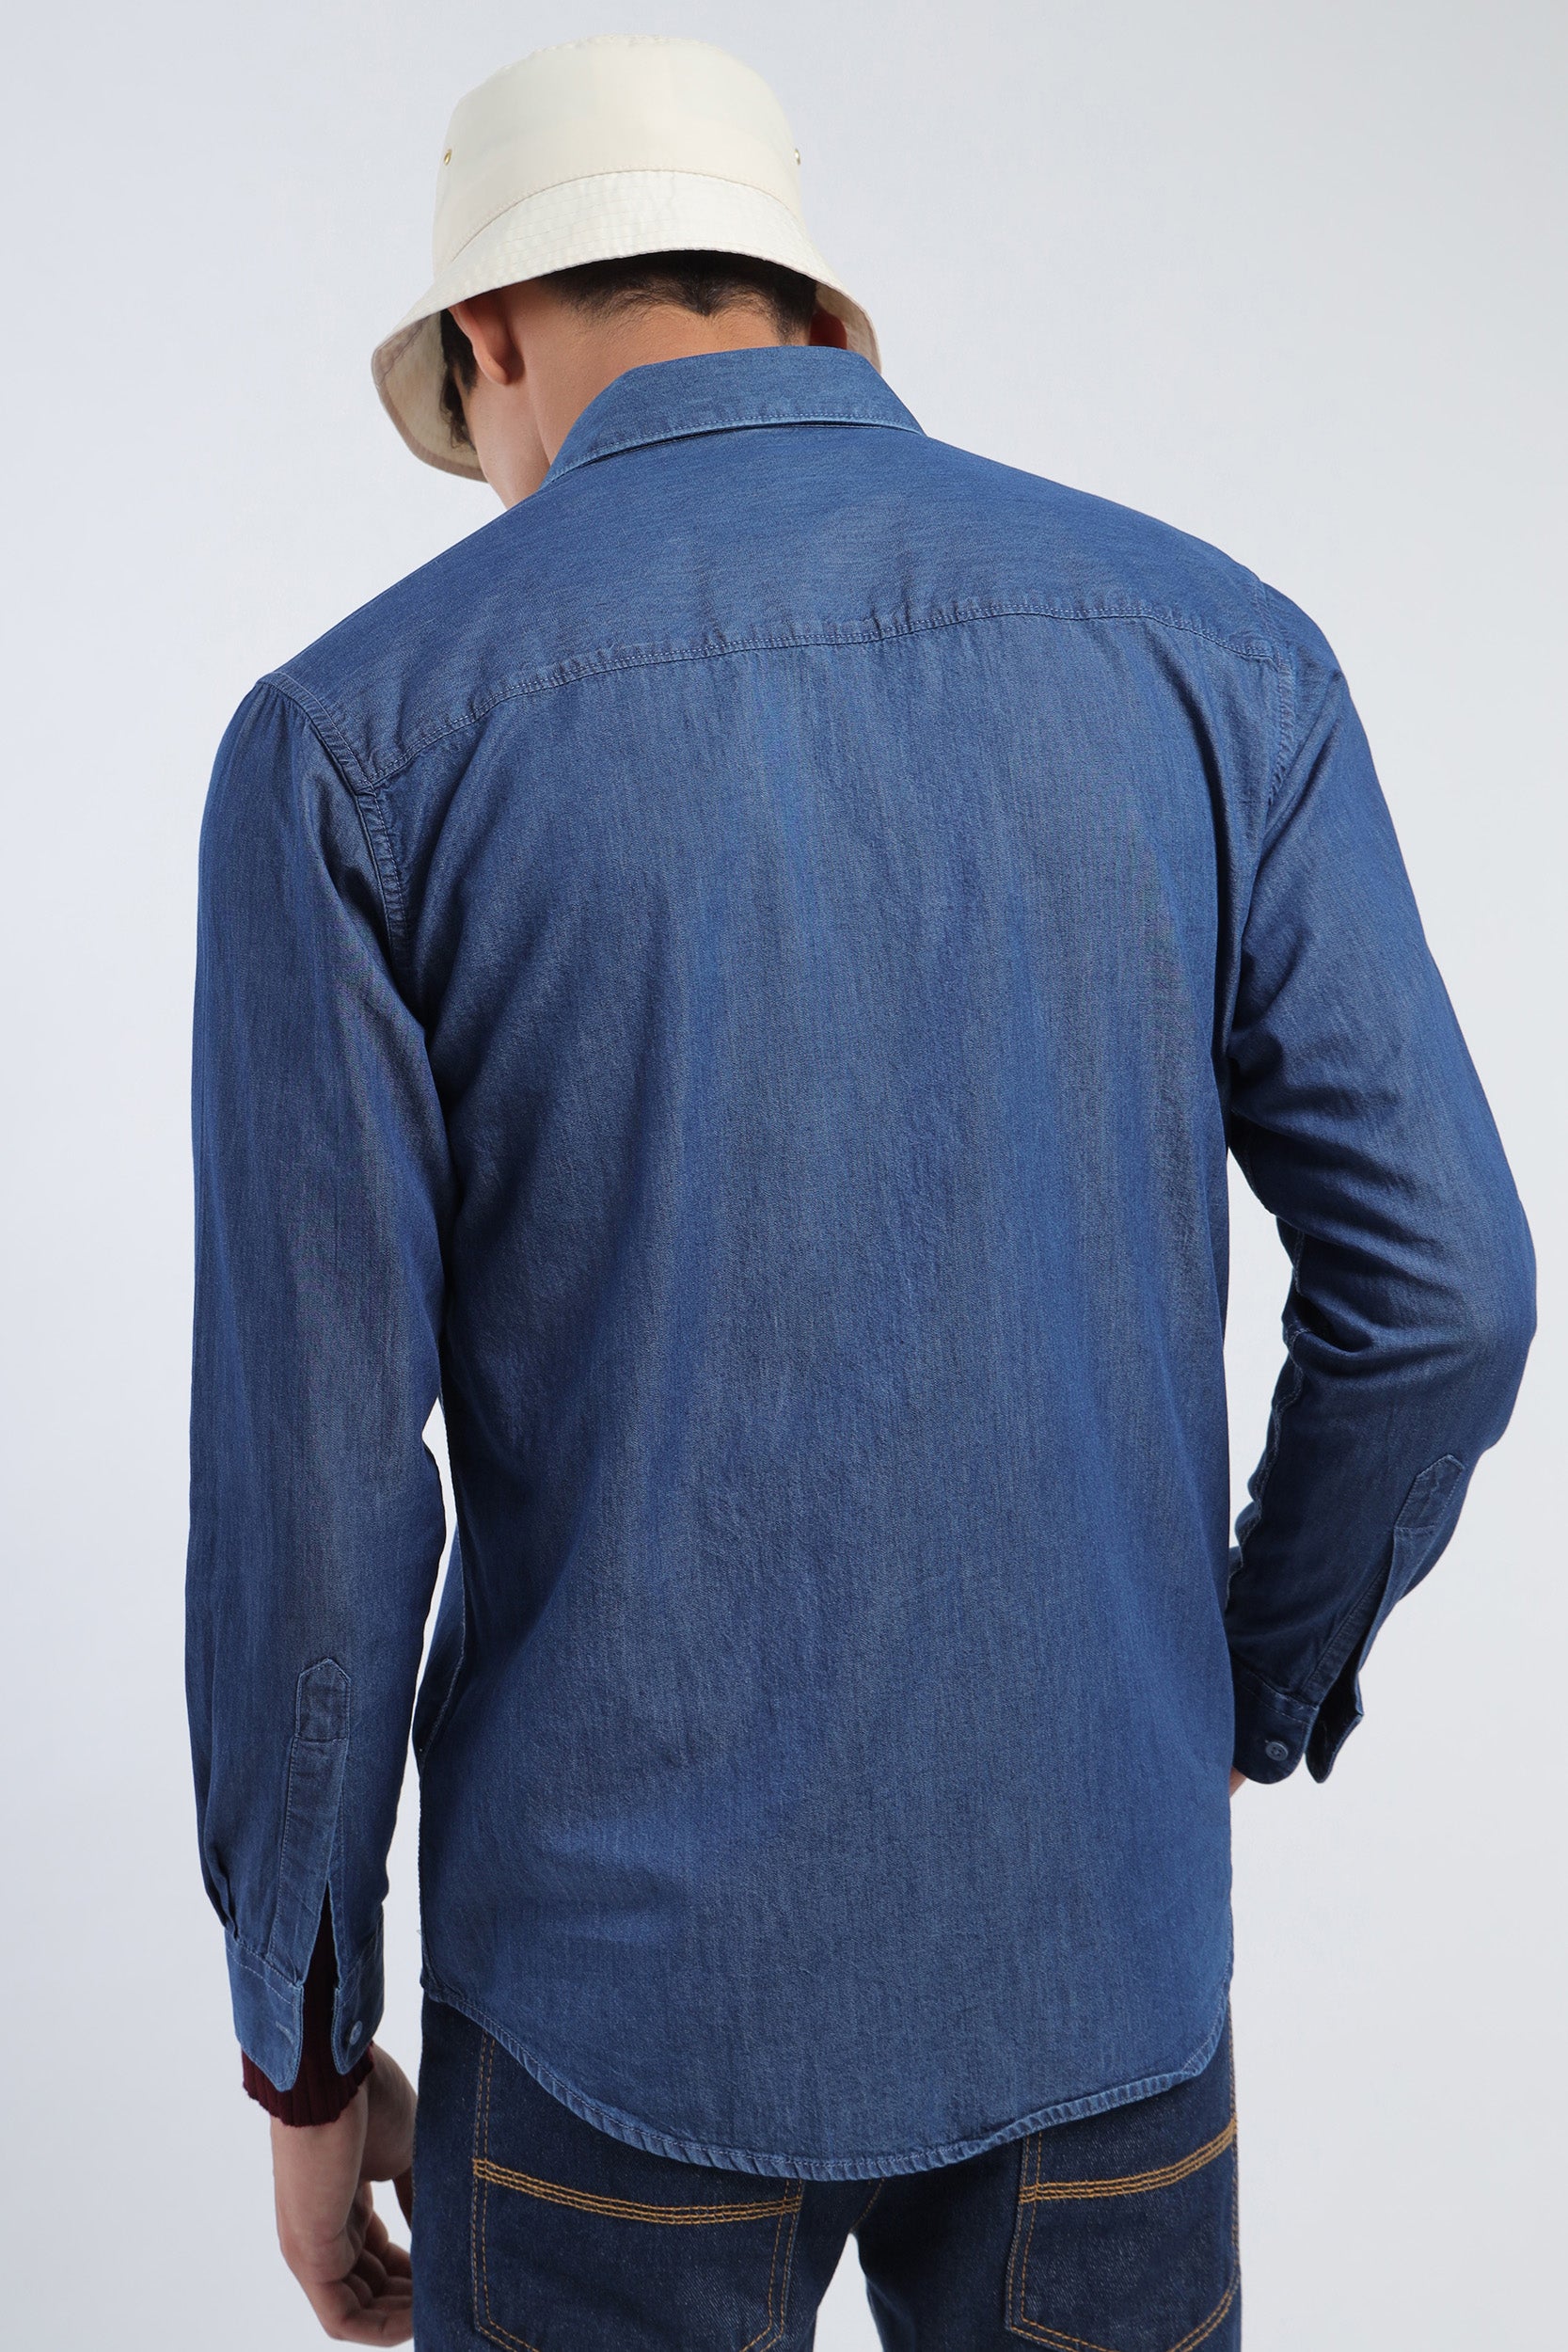 New River Genuine Article denim long sleeve shirt, collarless Size S | eBay